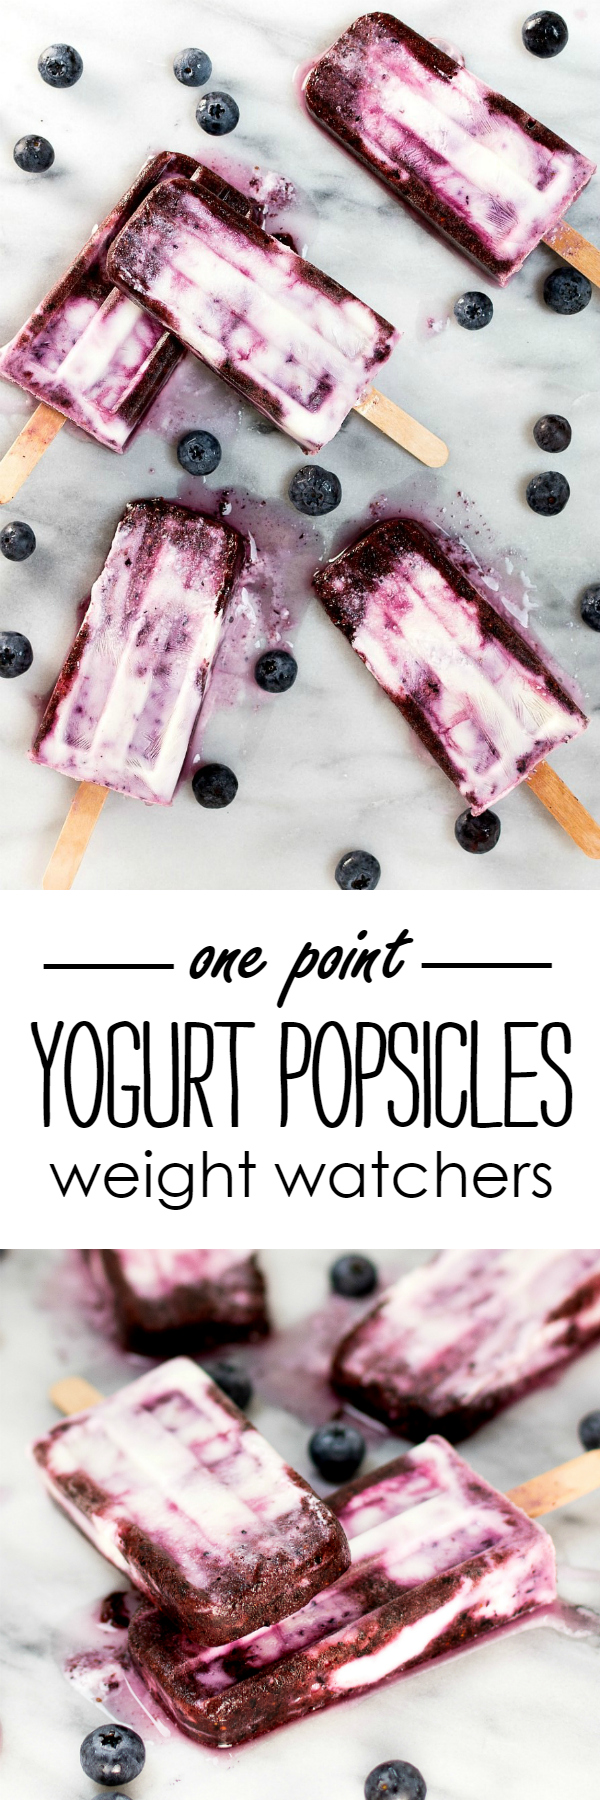 weight-watchers-dessert-ideas-yogurt-popsicles